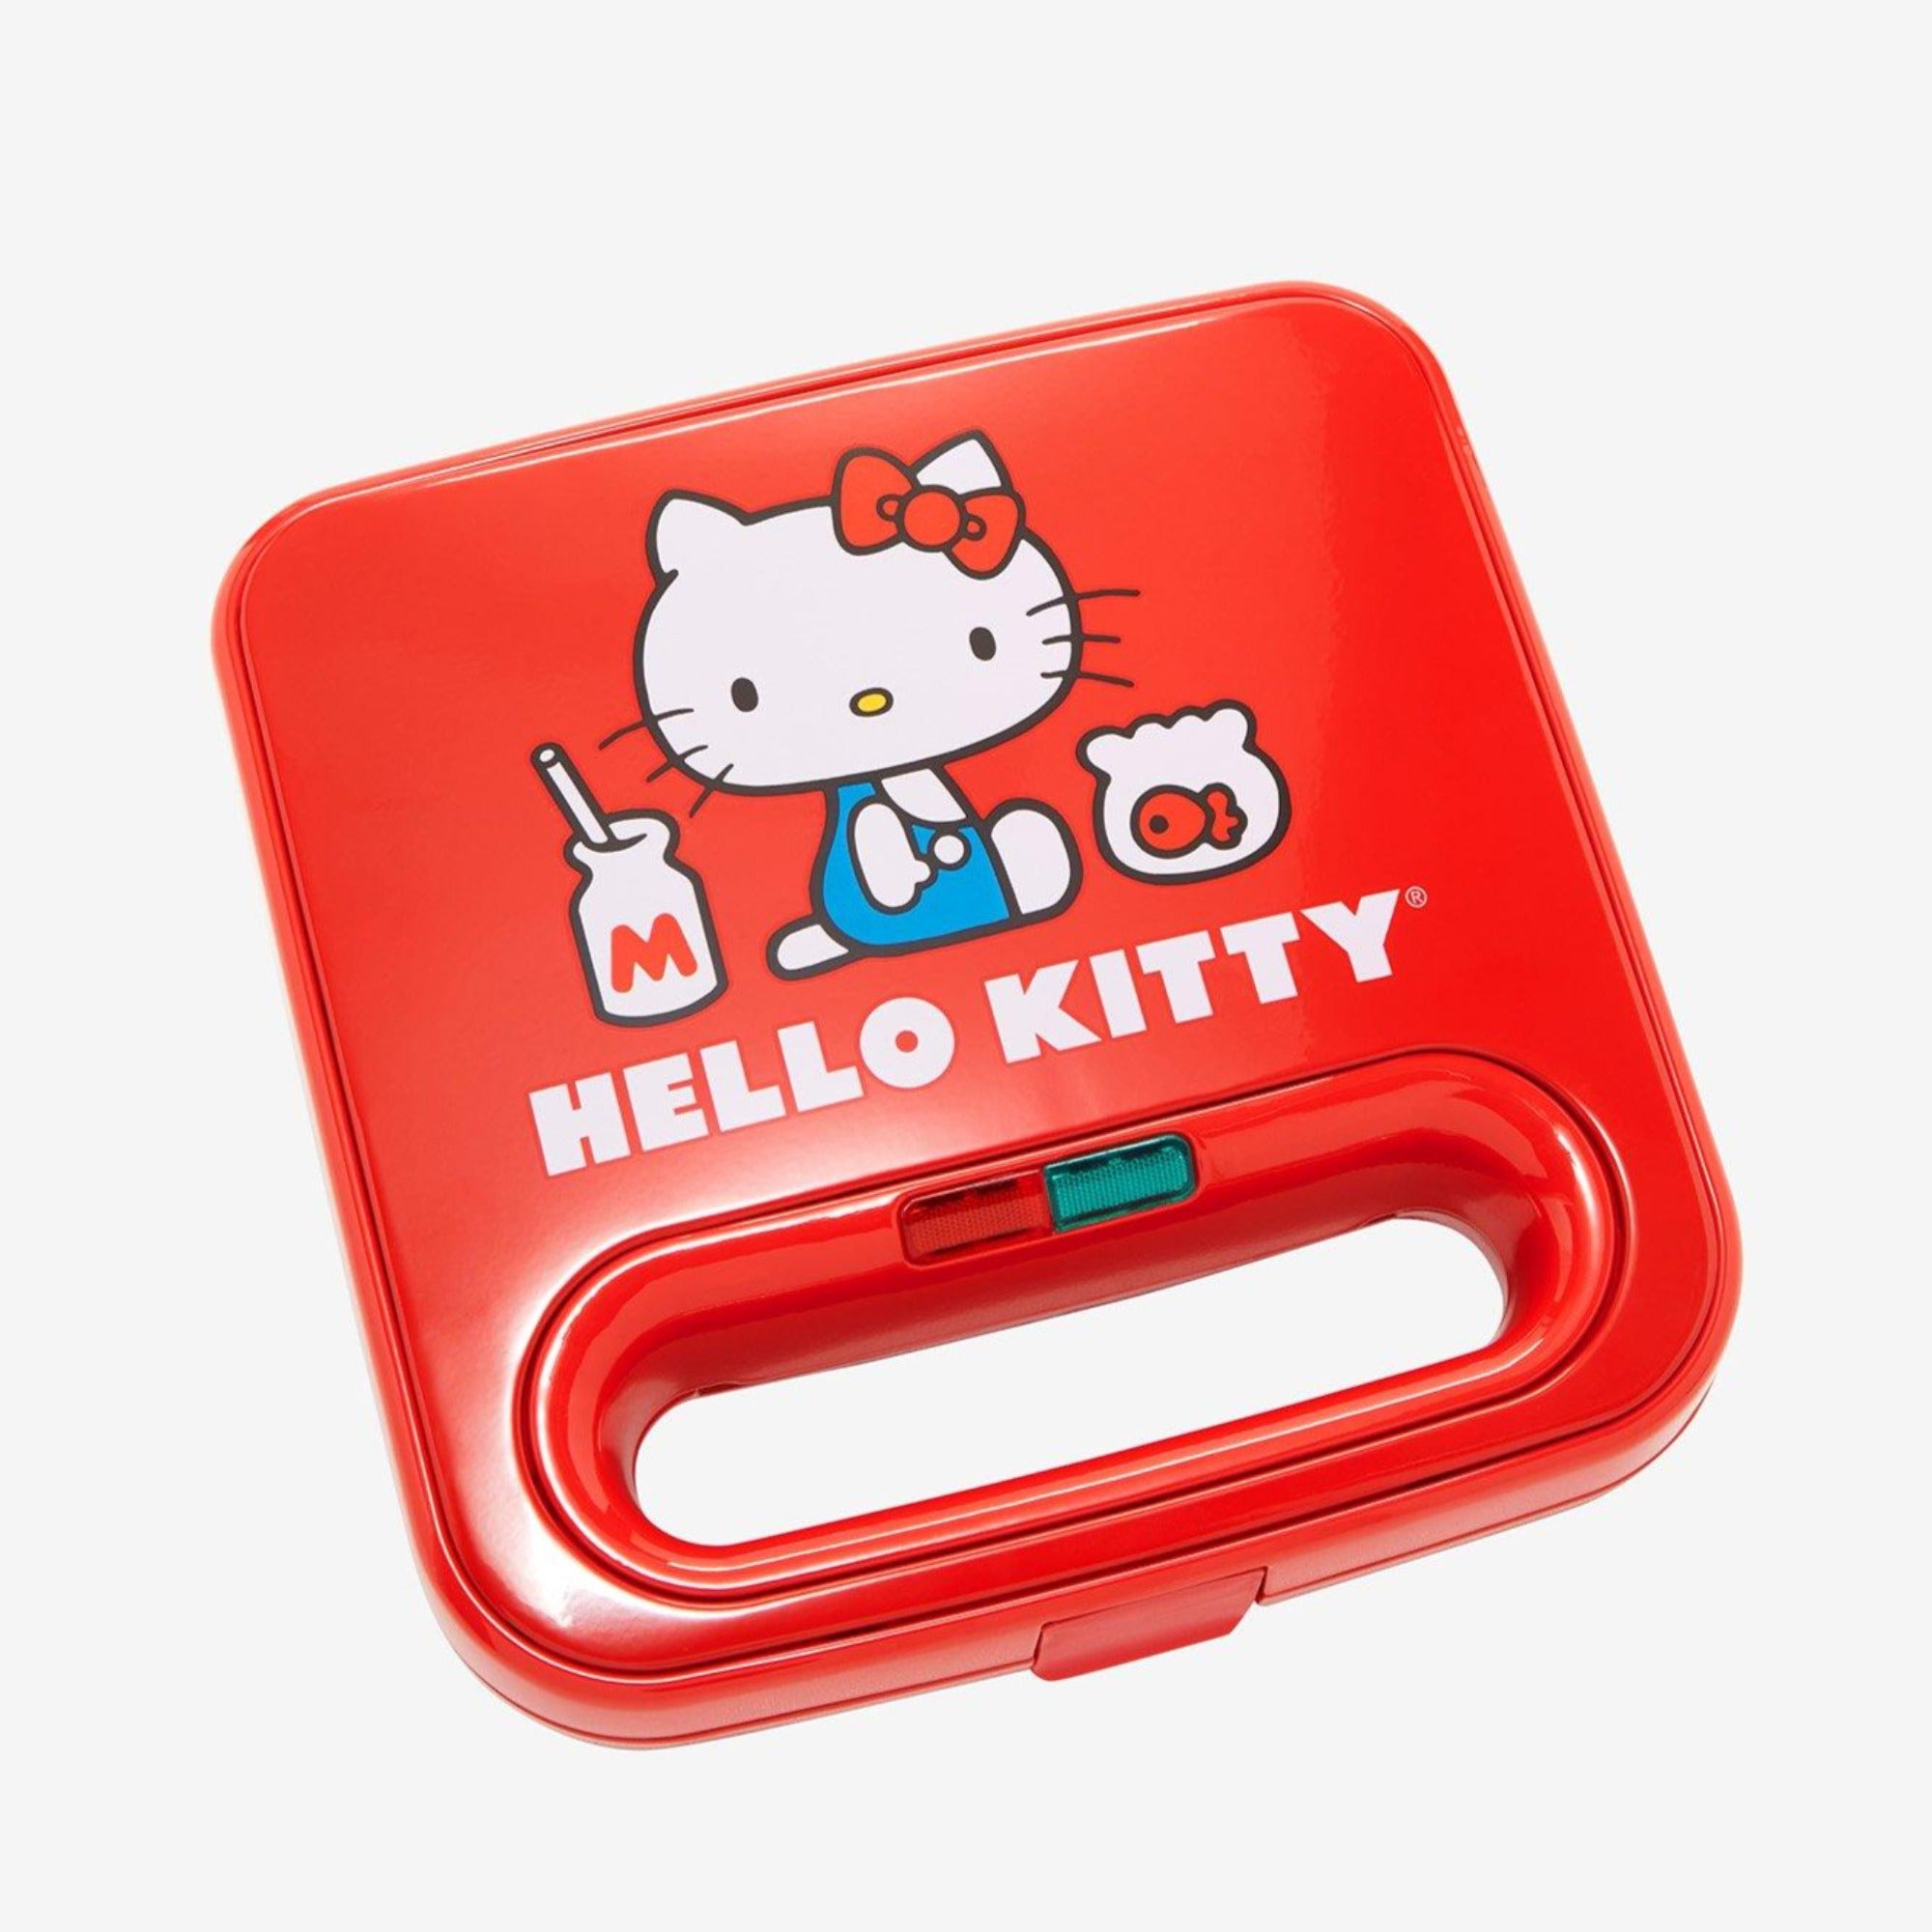 Hello Kitty Hot Sandwich Maker (Japan) – Where Locals Snack